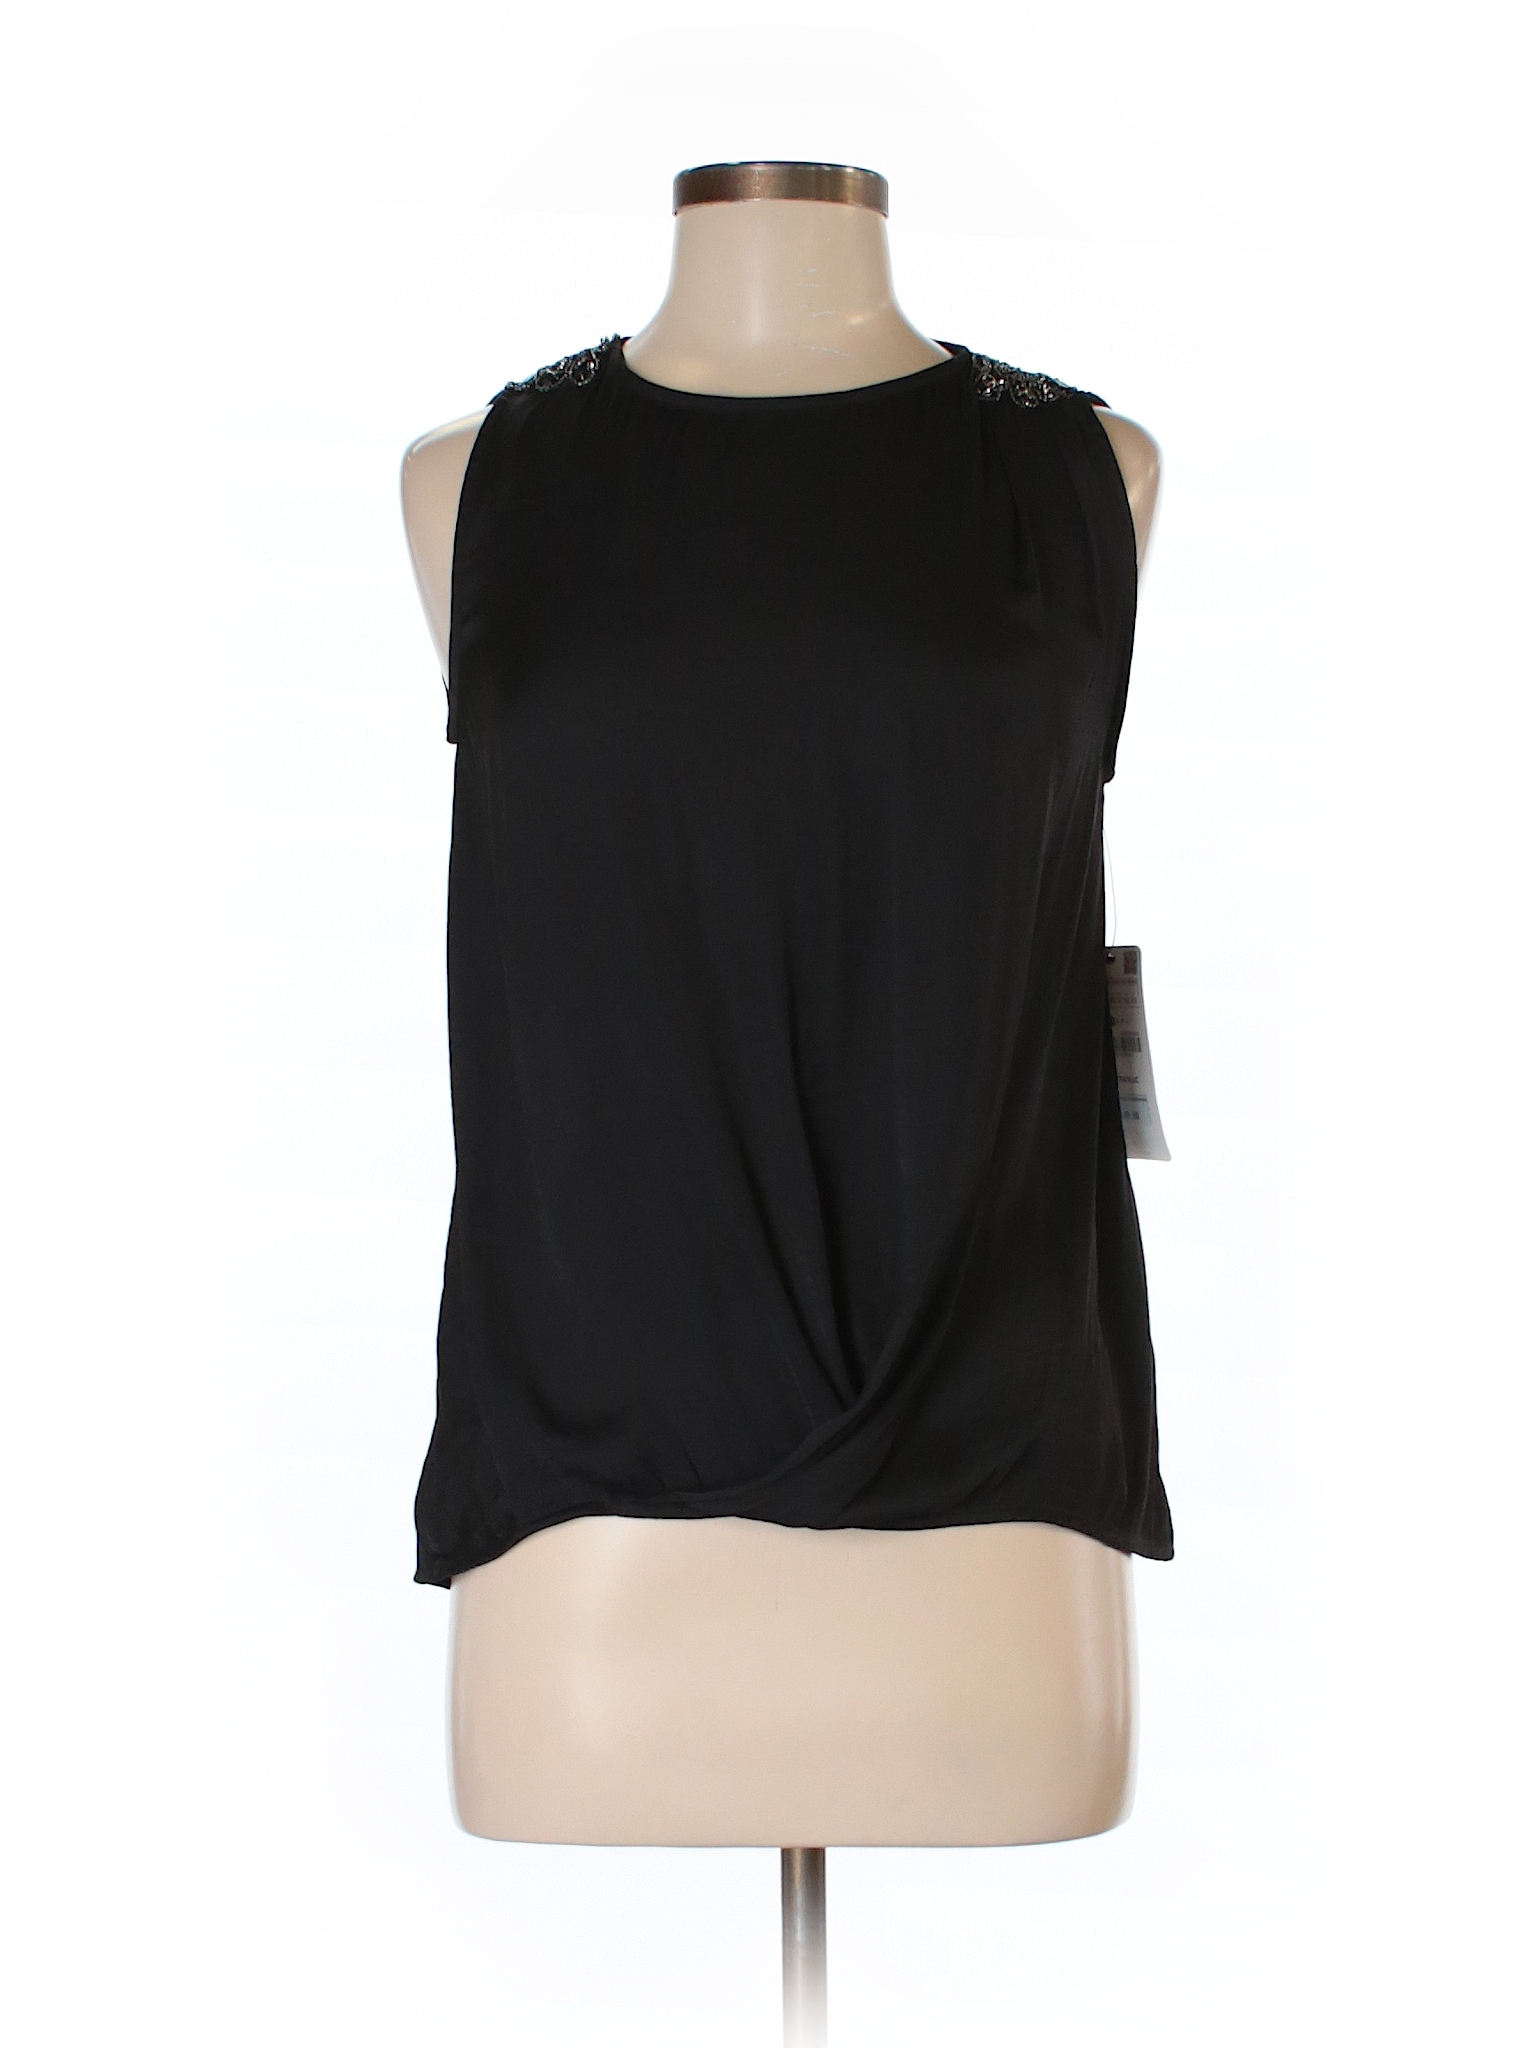 Trafaluc by Zara 100% Polyester Solid Black Sleeveless Blouse Size XS ...